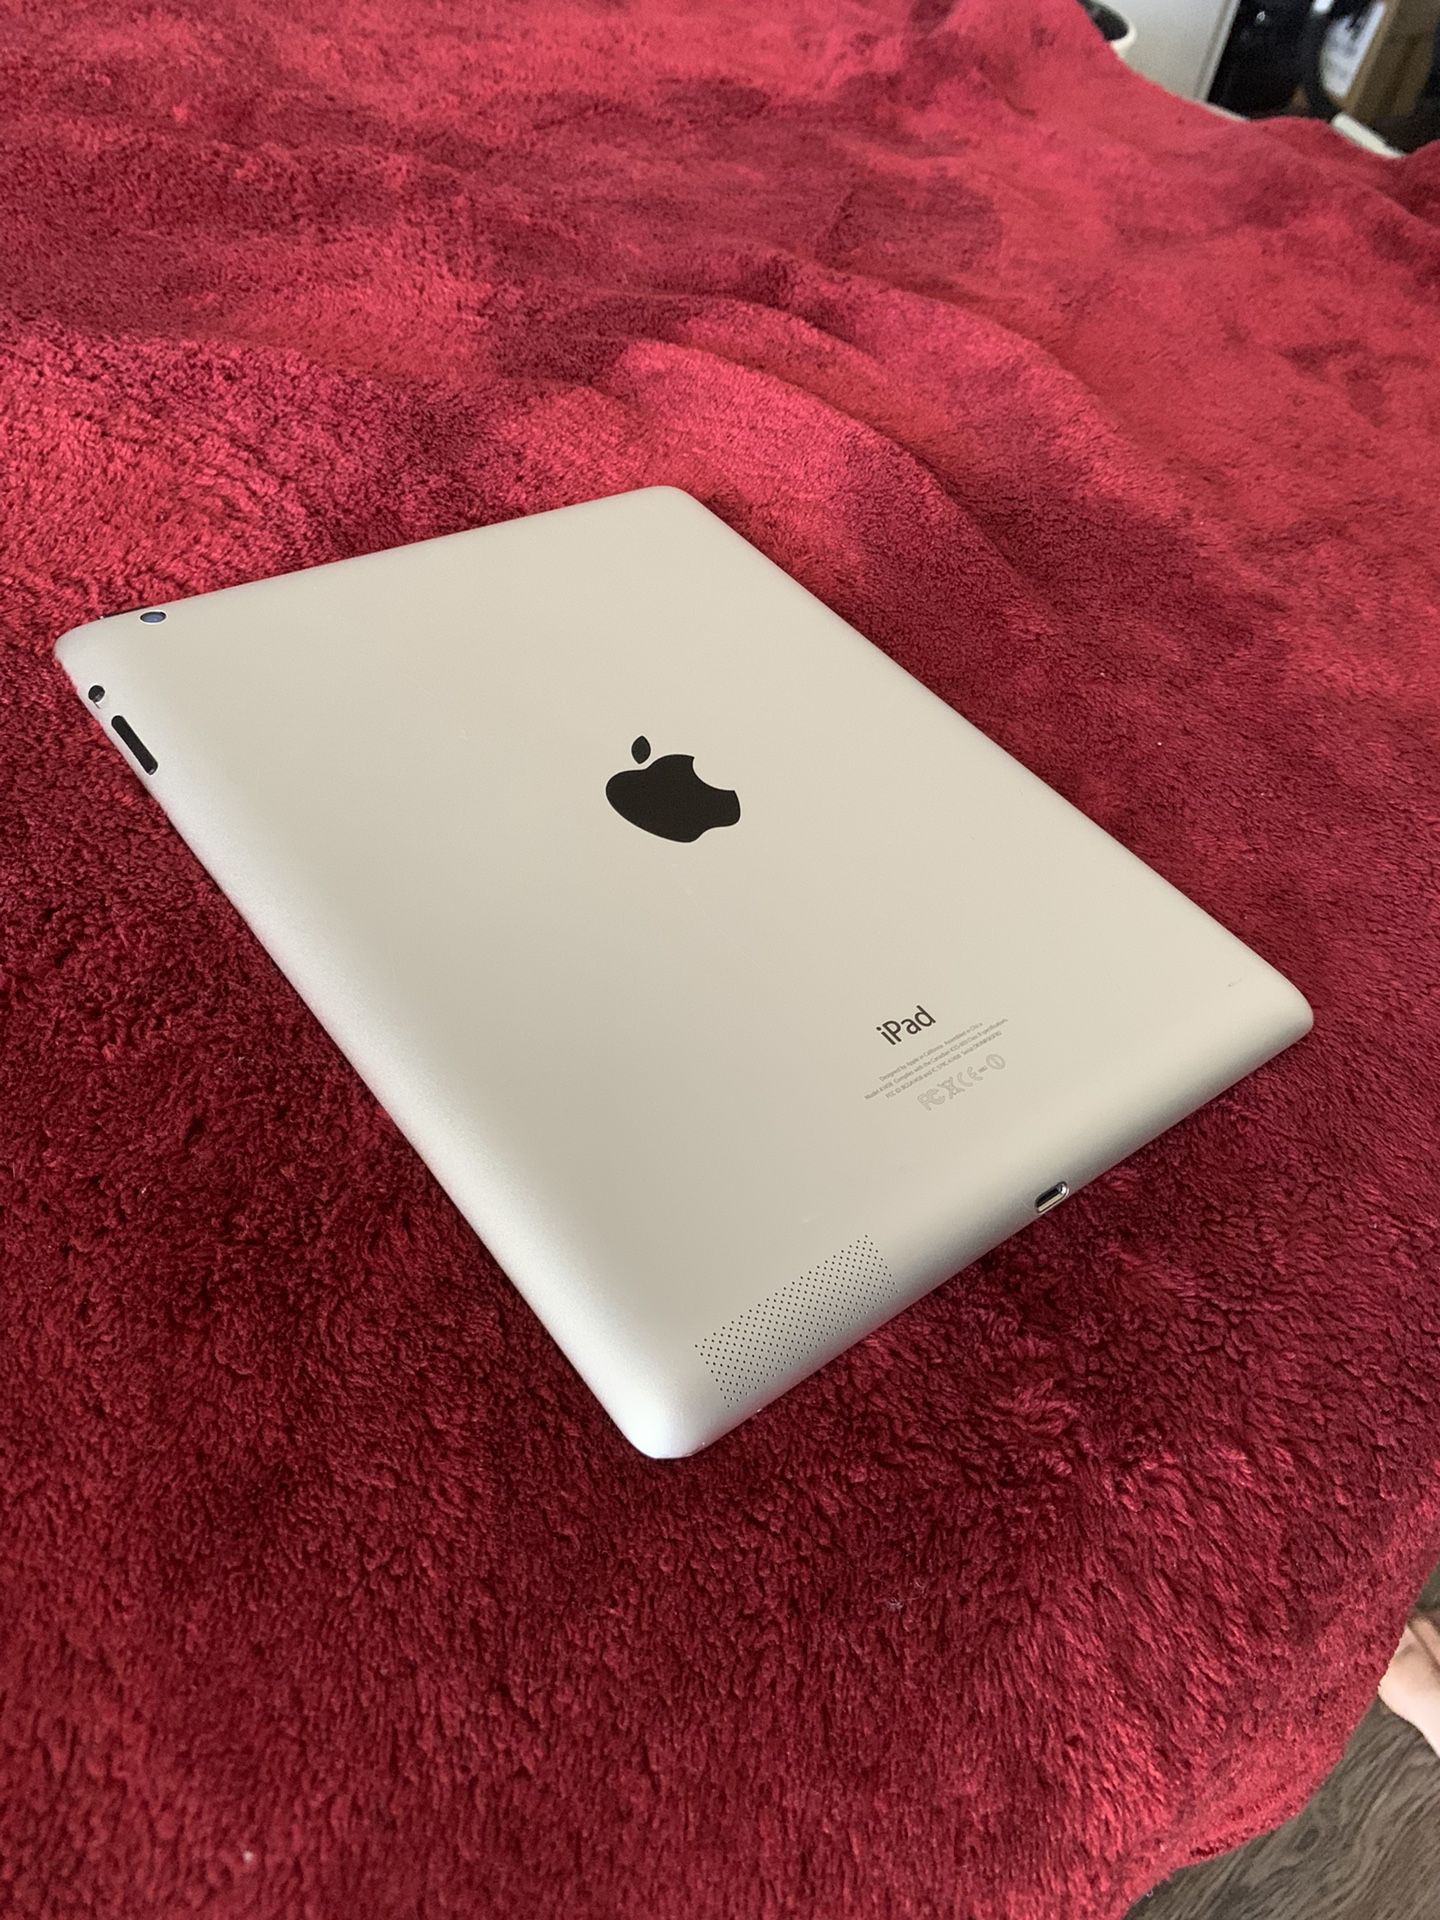 iPad 4th Generation 16GB (Apple ID locked, for parts)